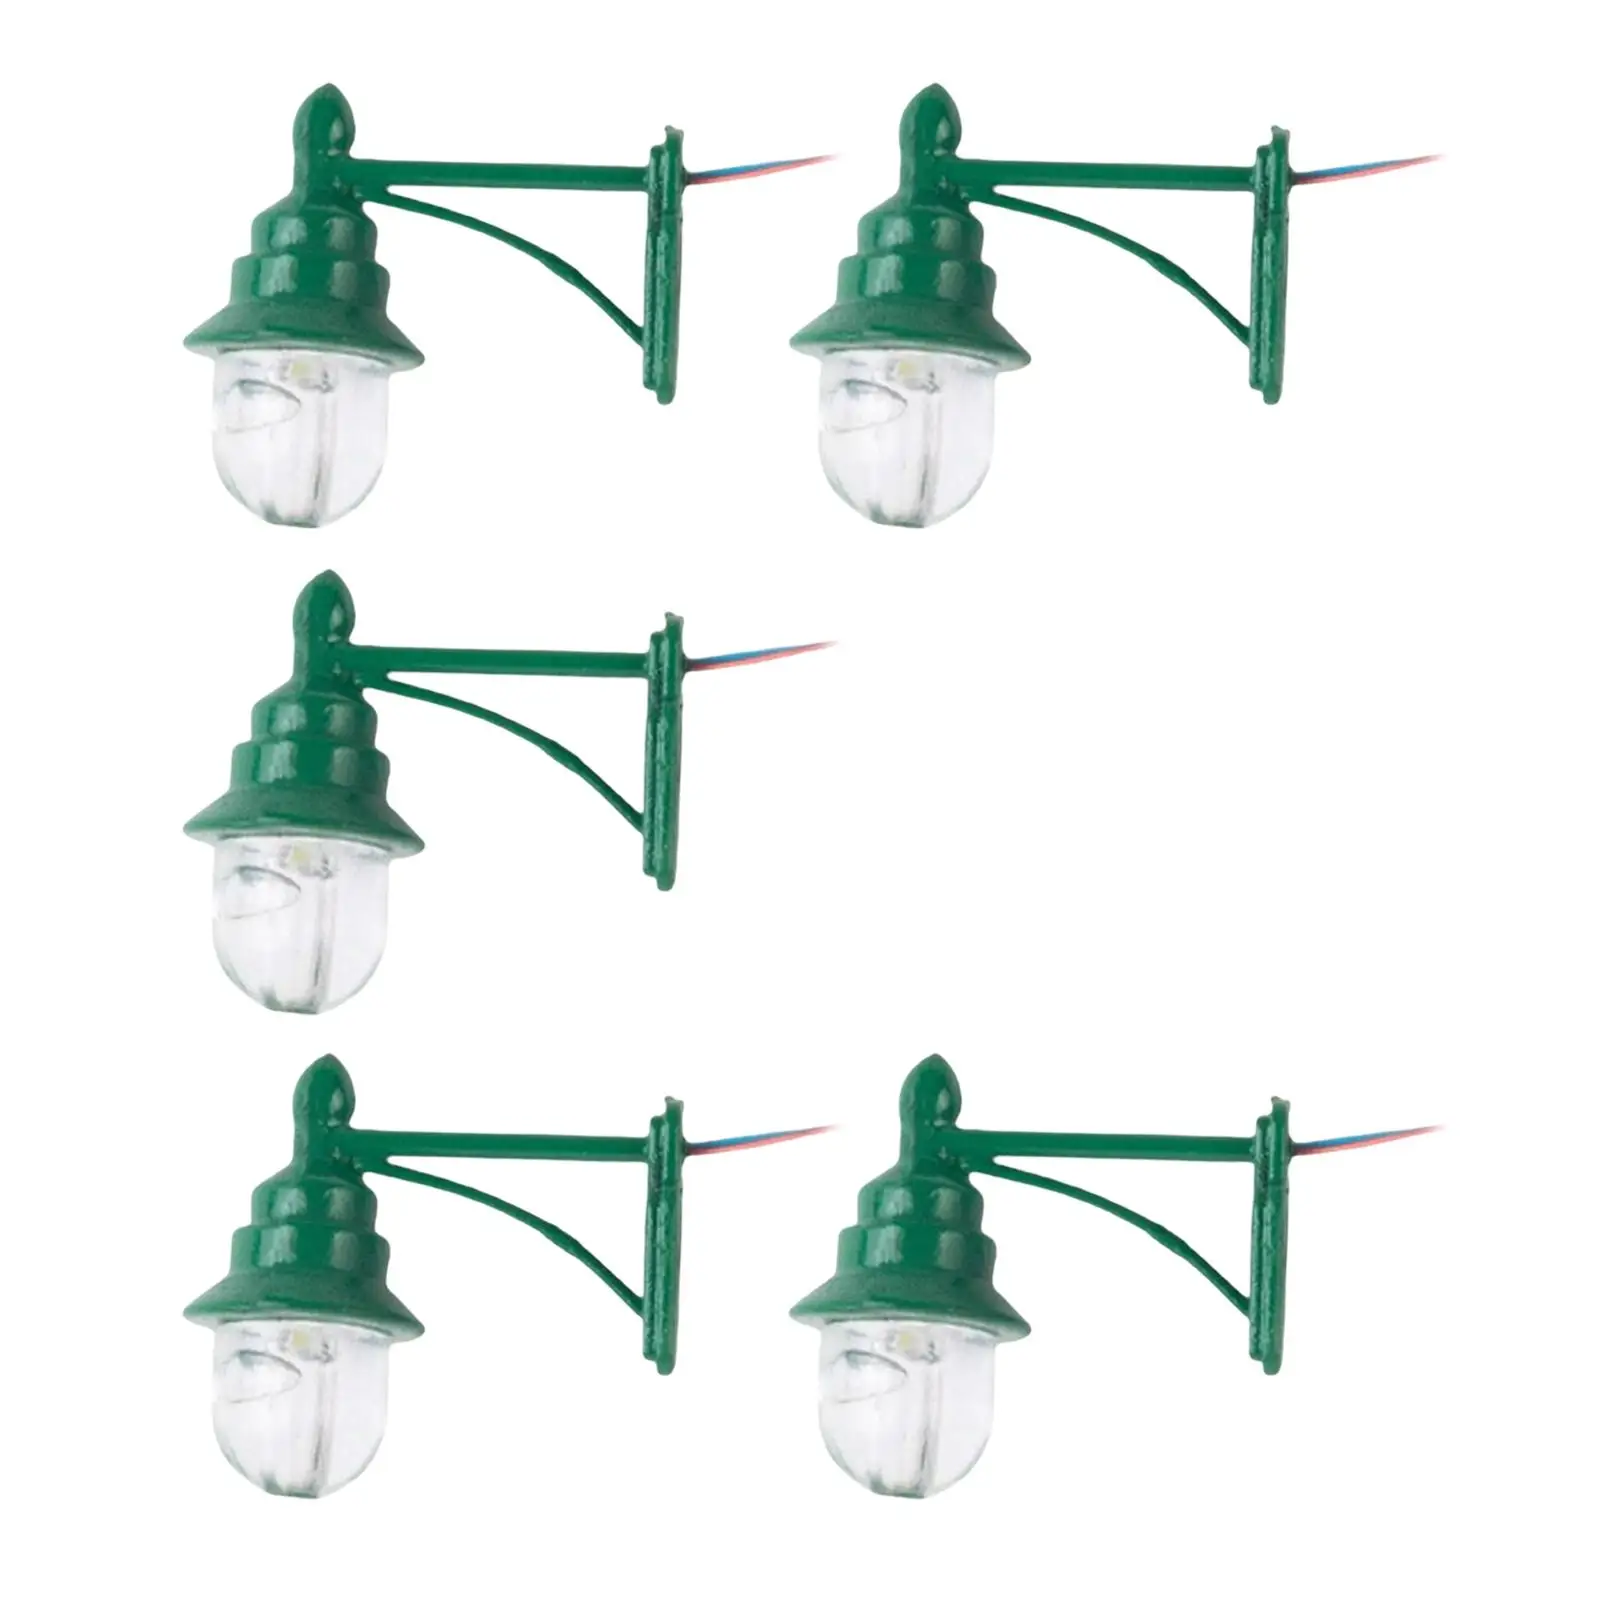 1:87 Model Railway Lamps Ornament Streets Lamps DIY Hanging Lamp 5x for Living